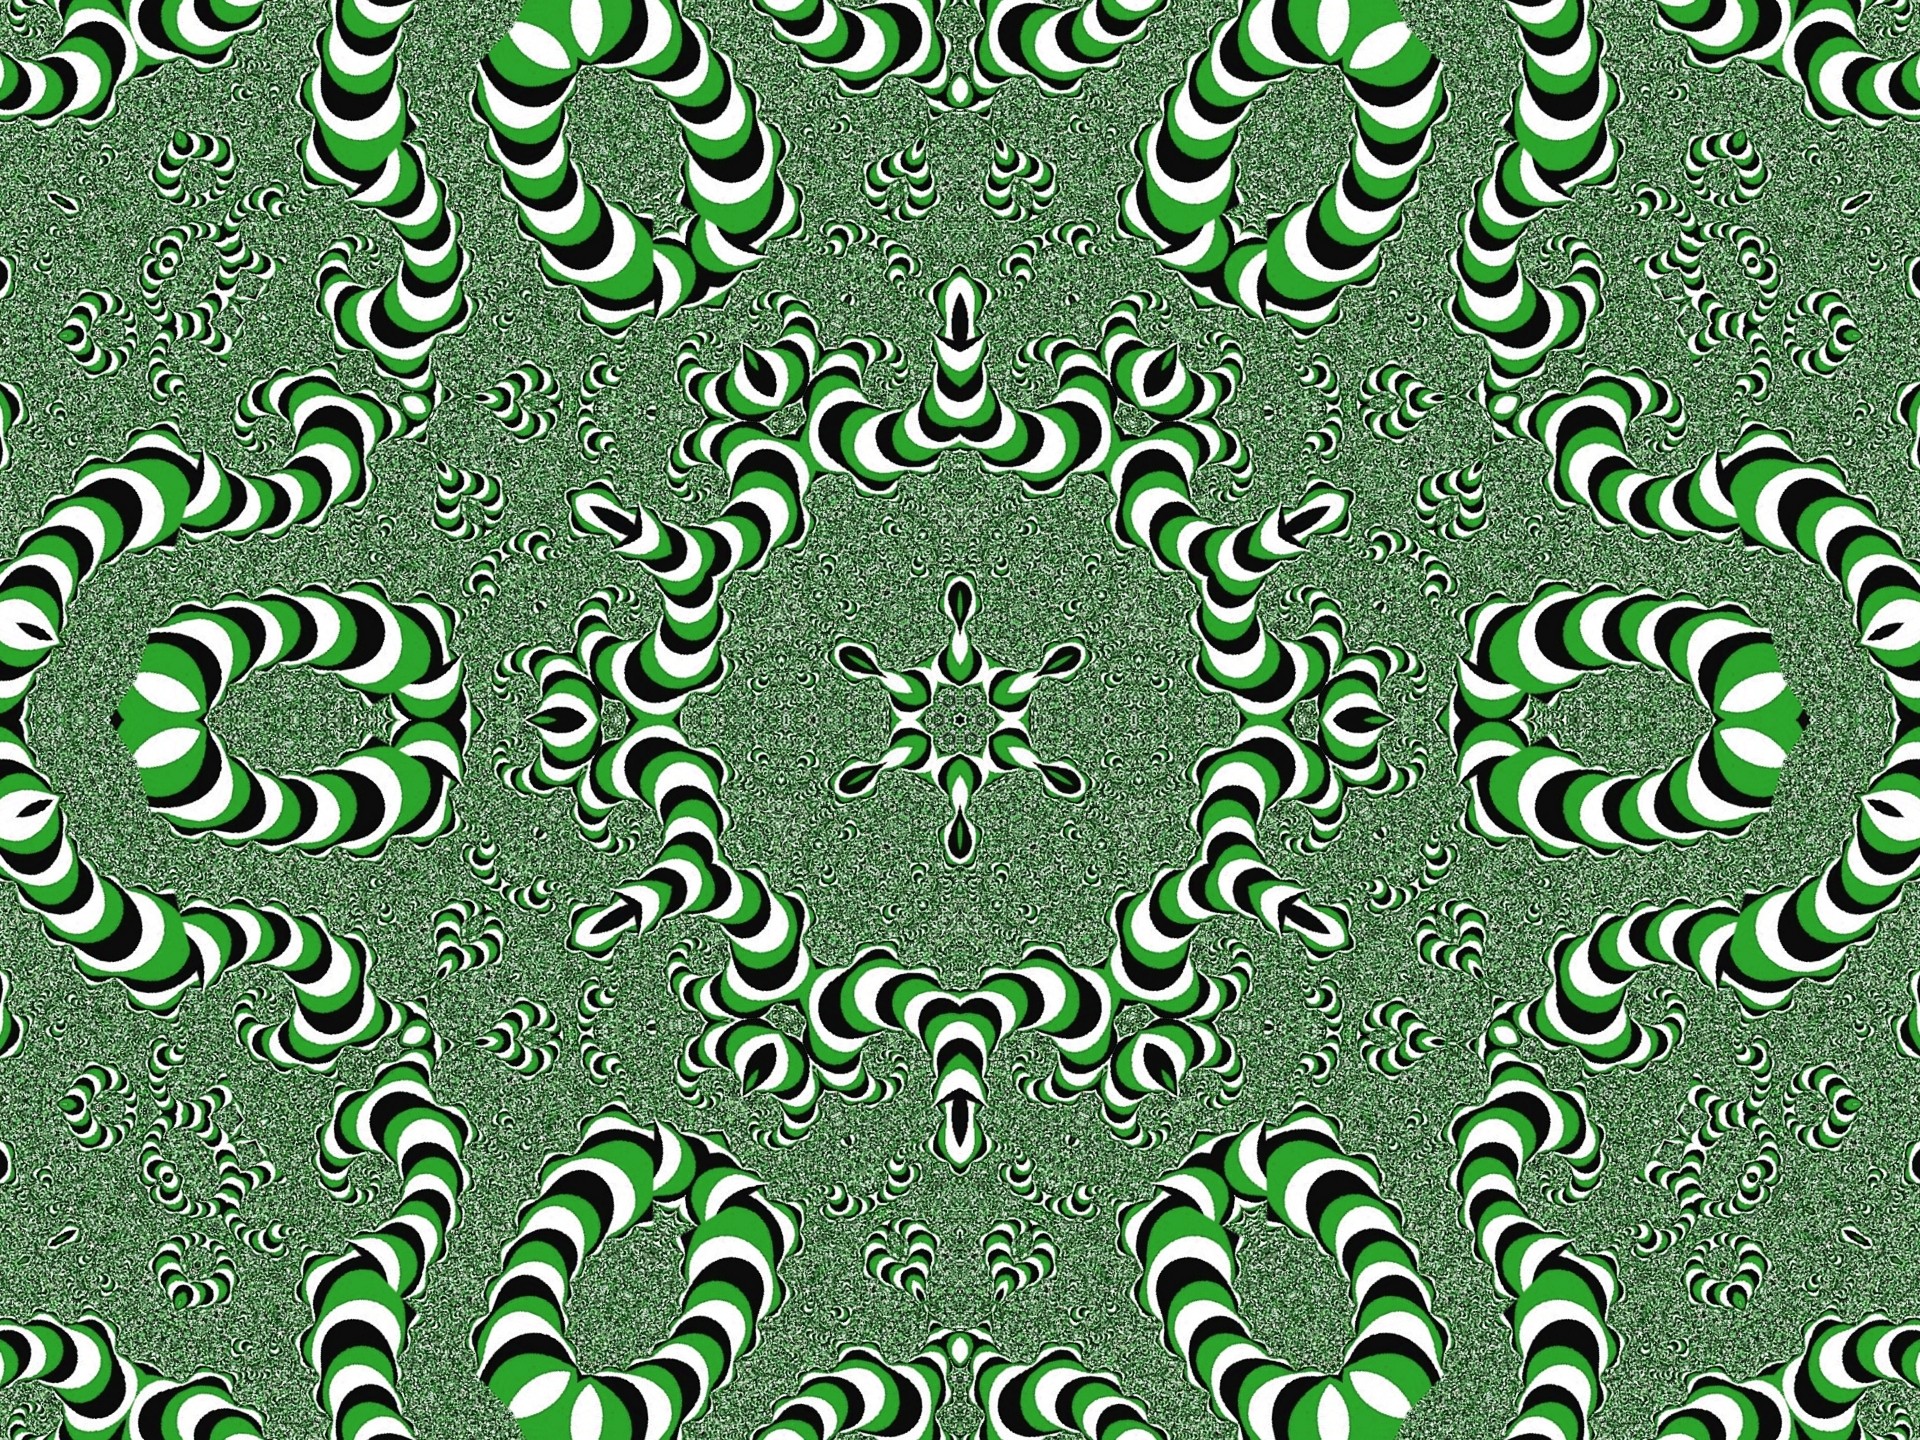 astronira abstraction pattern free photo